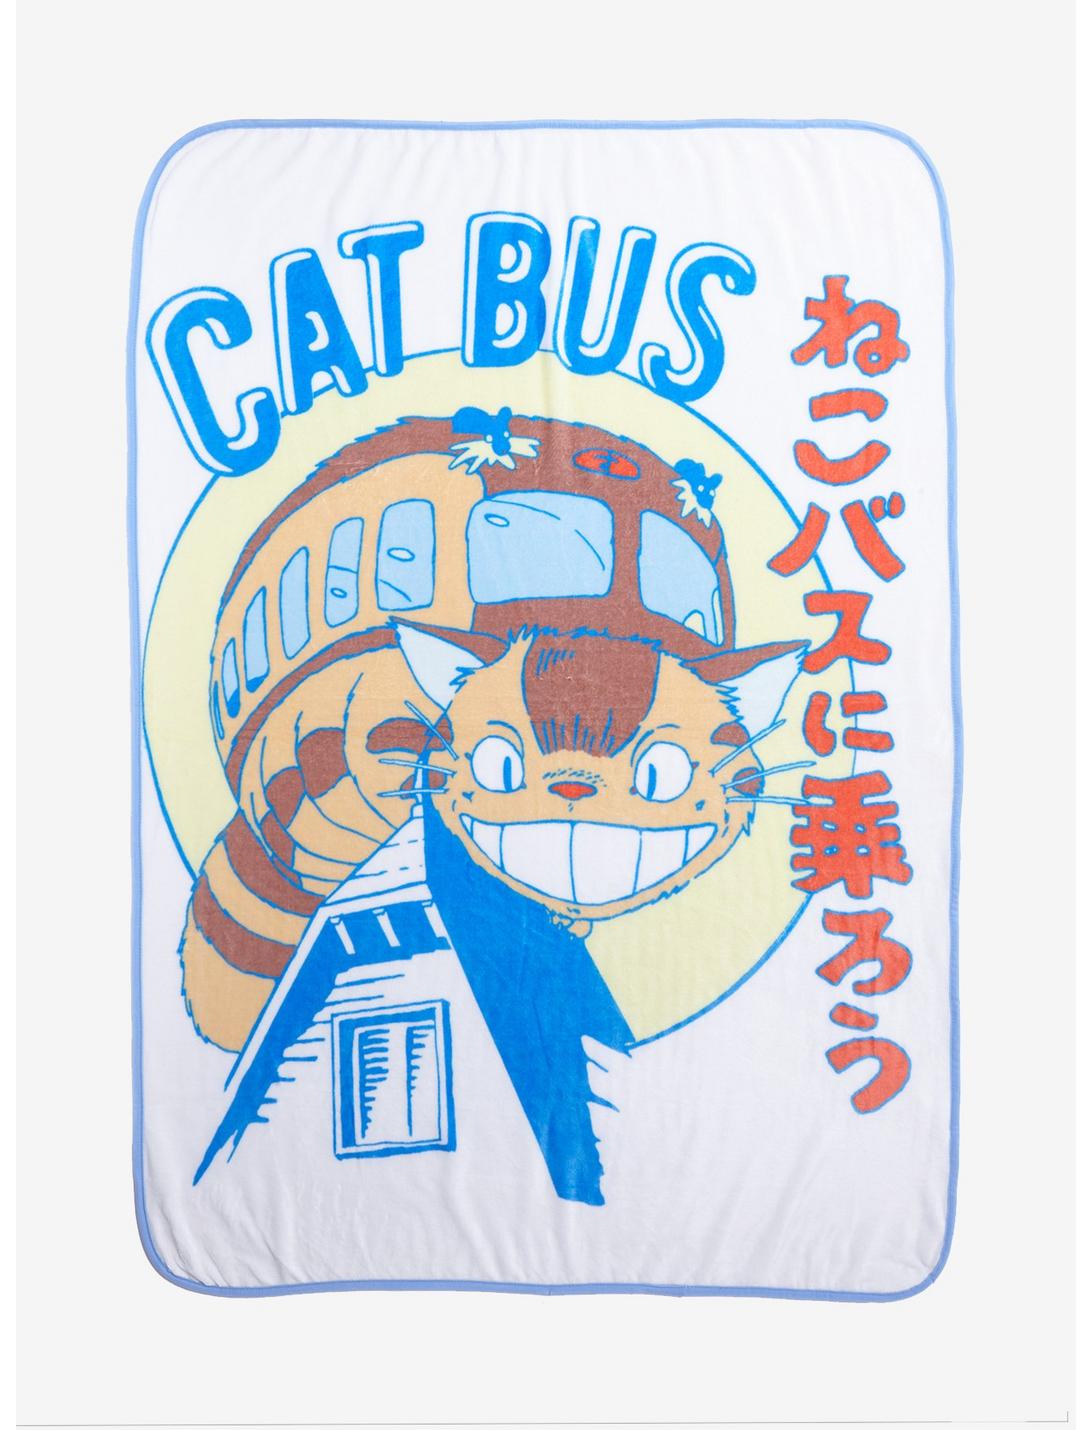 Studio Ghibli My Neighbor Totoro Cat Bus Throw Blanket, , hi-res